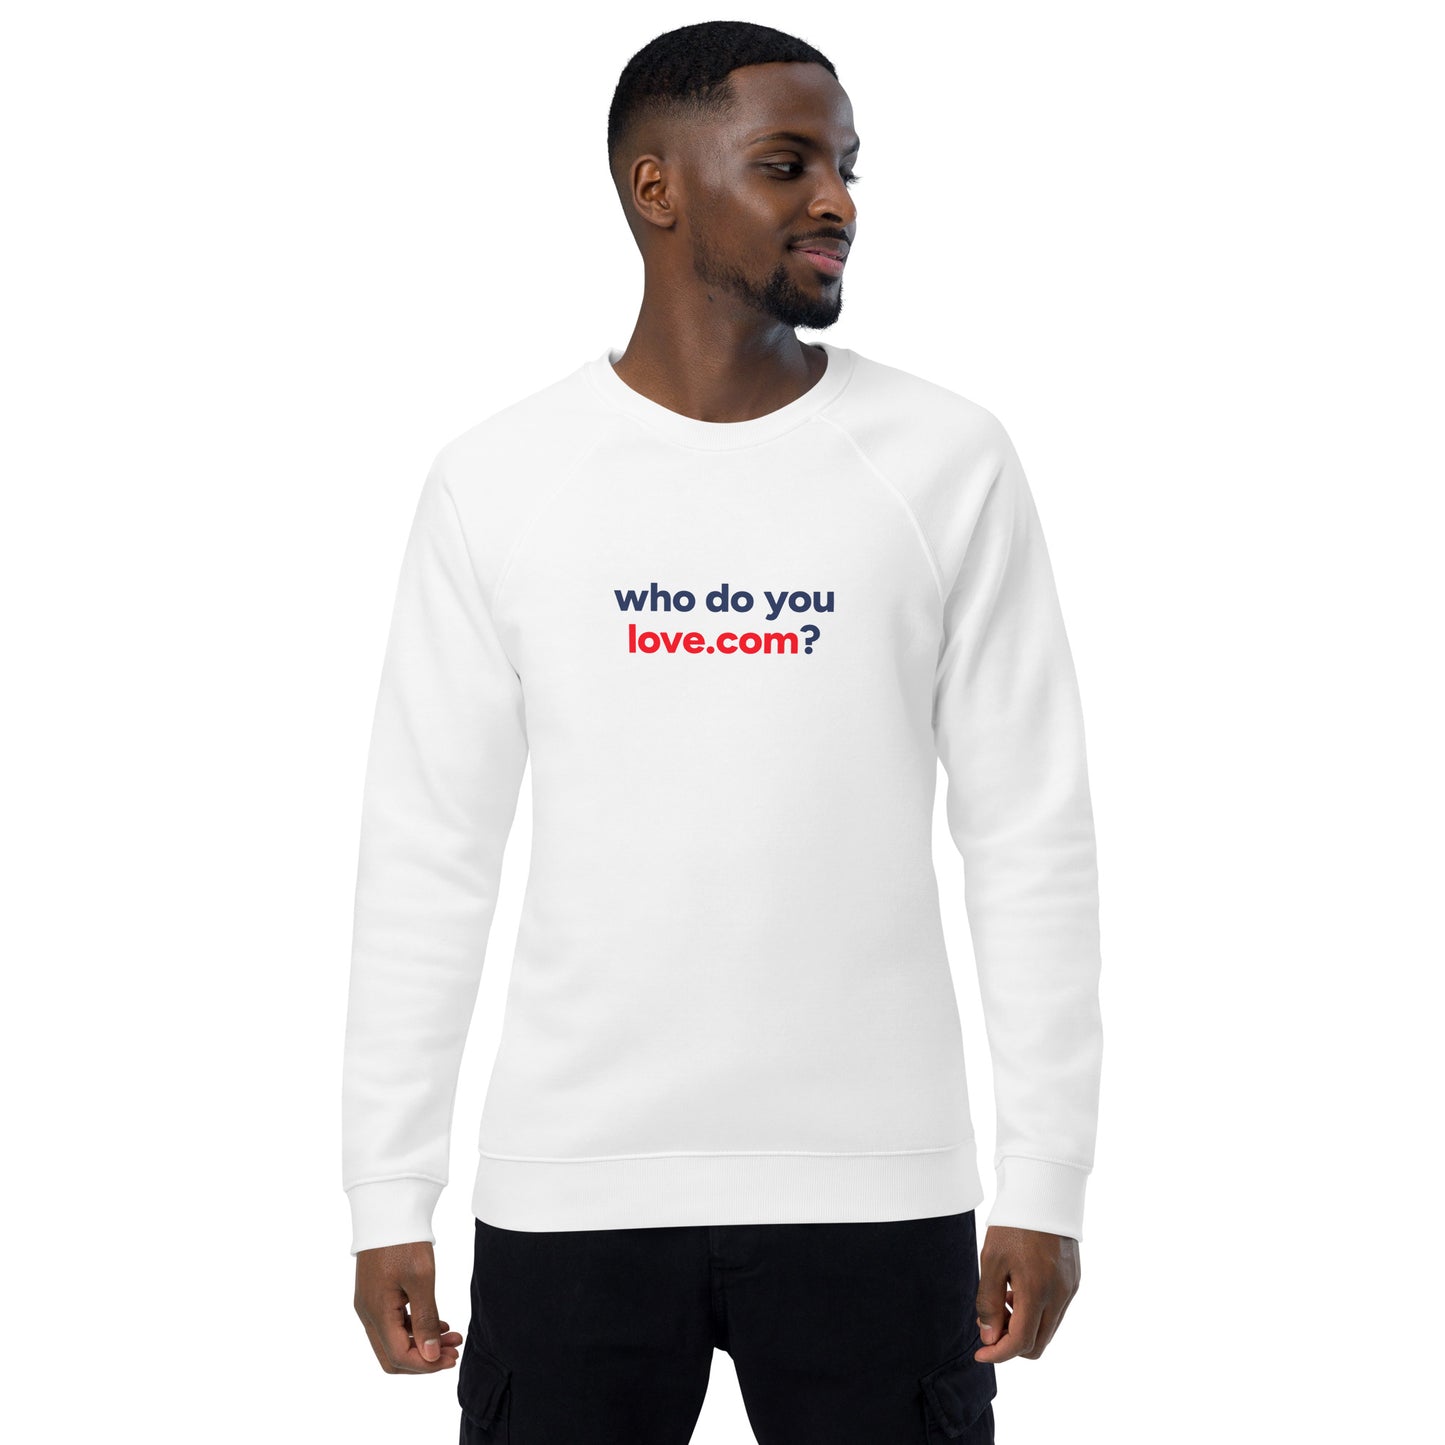 Who do you love.com? Unisex organic raglan sweatshirt